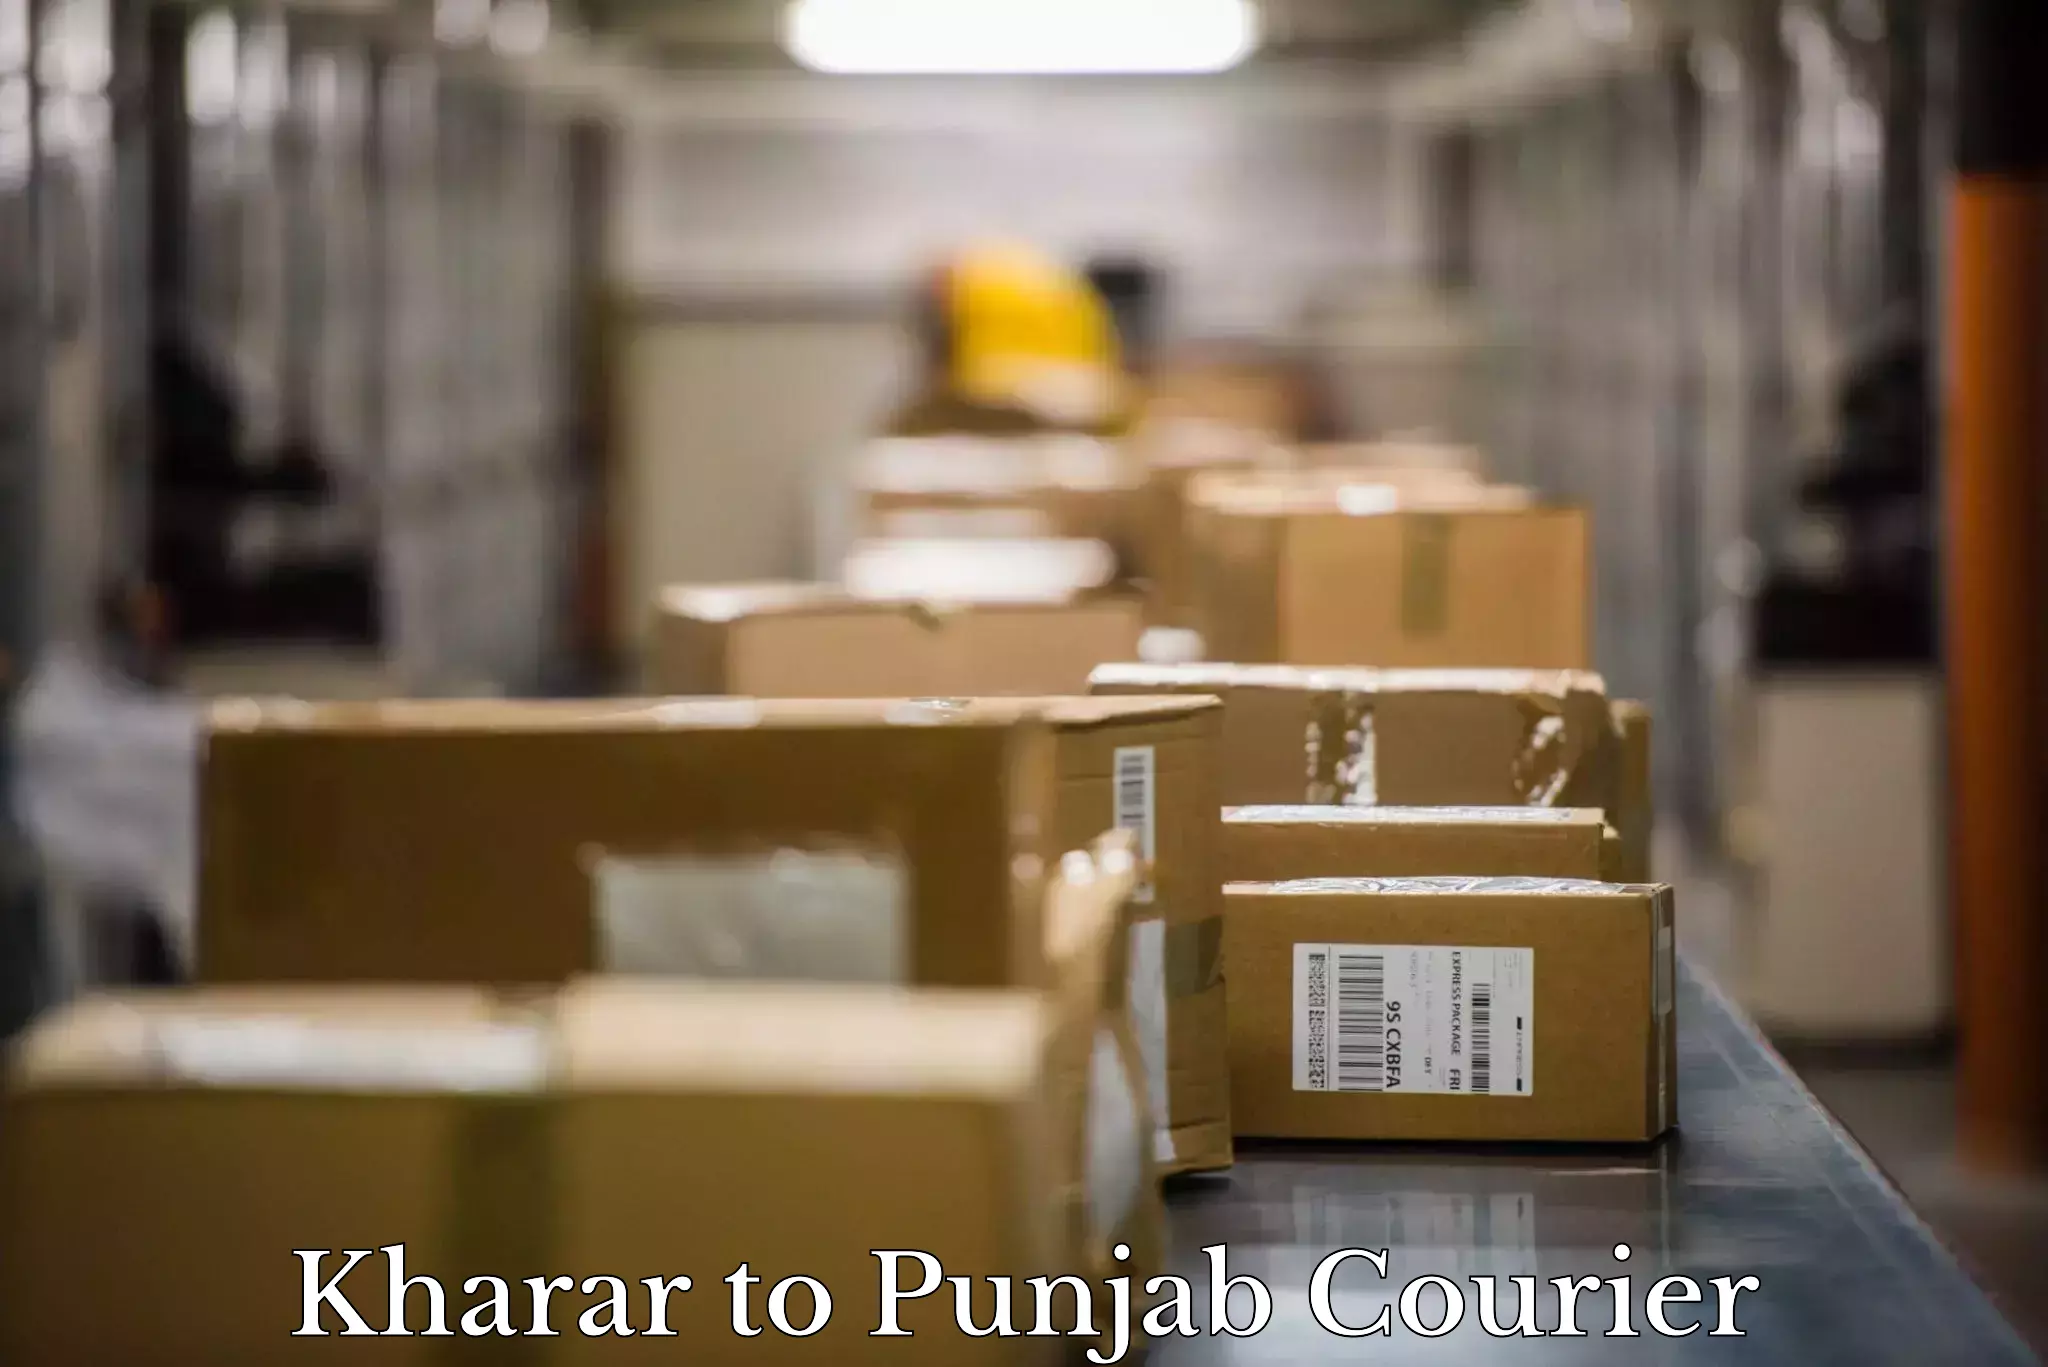 Household moving experts Kharar to Punjab